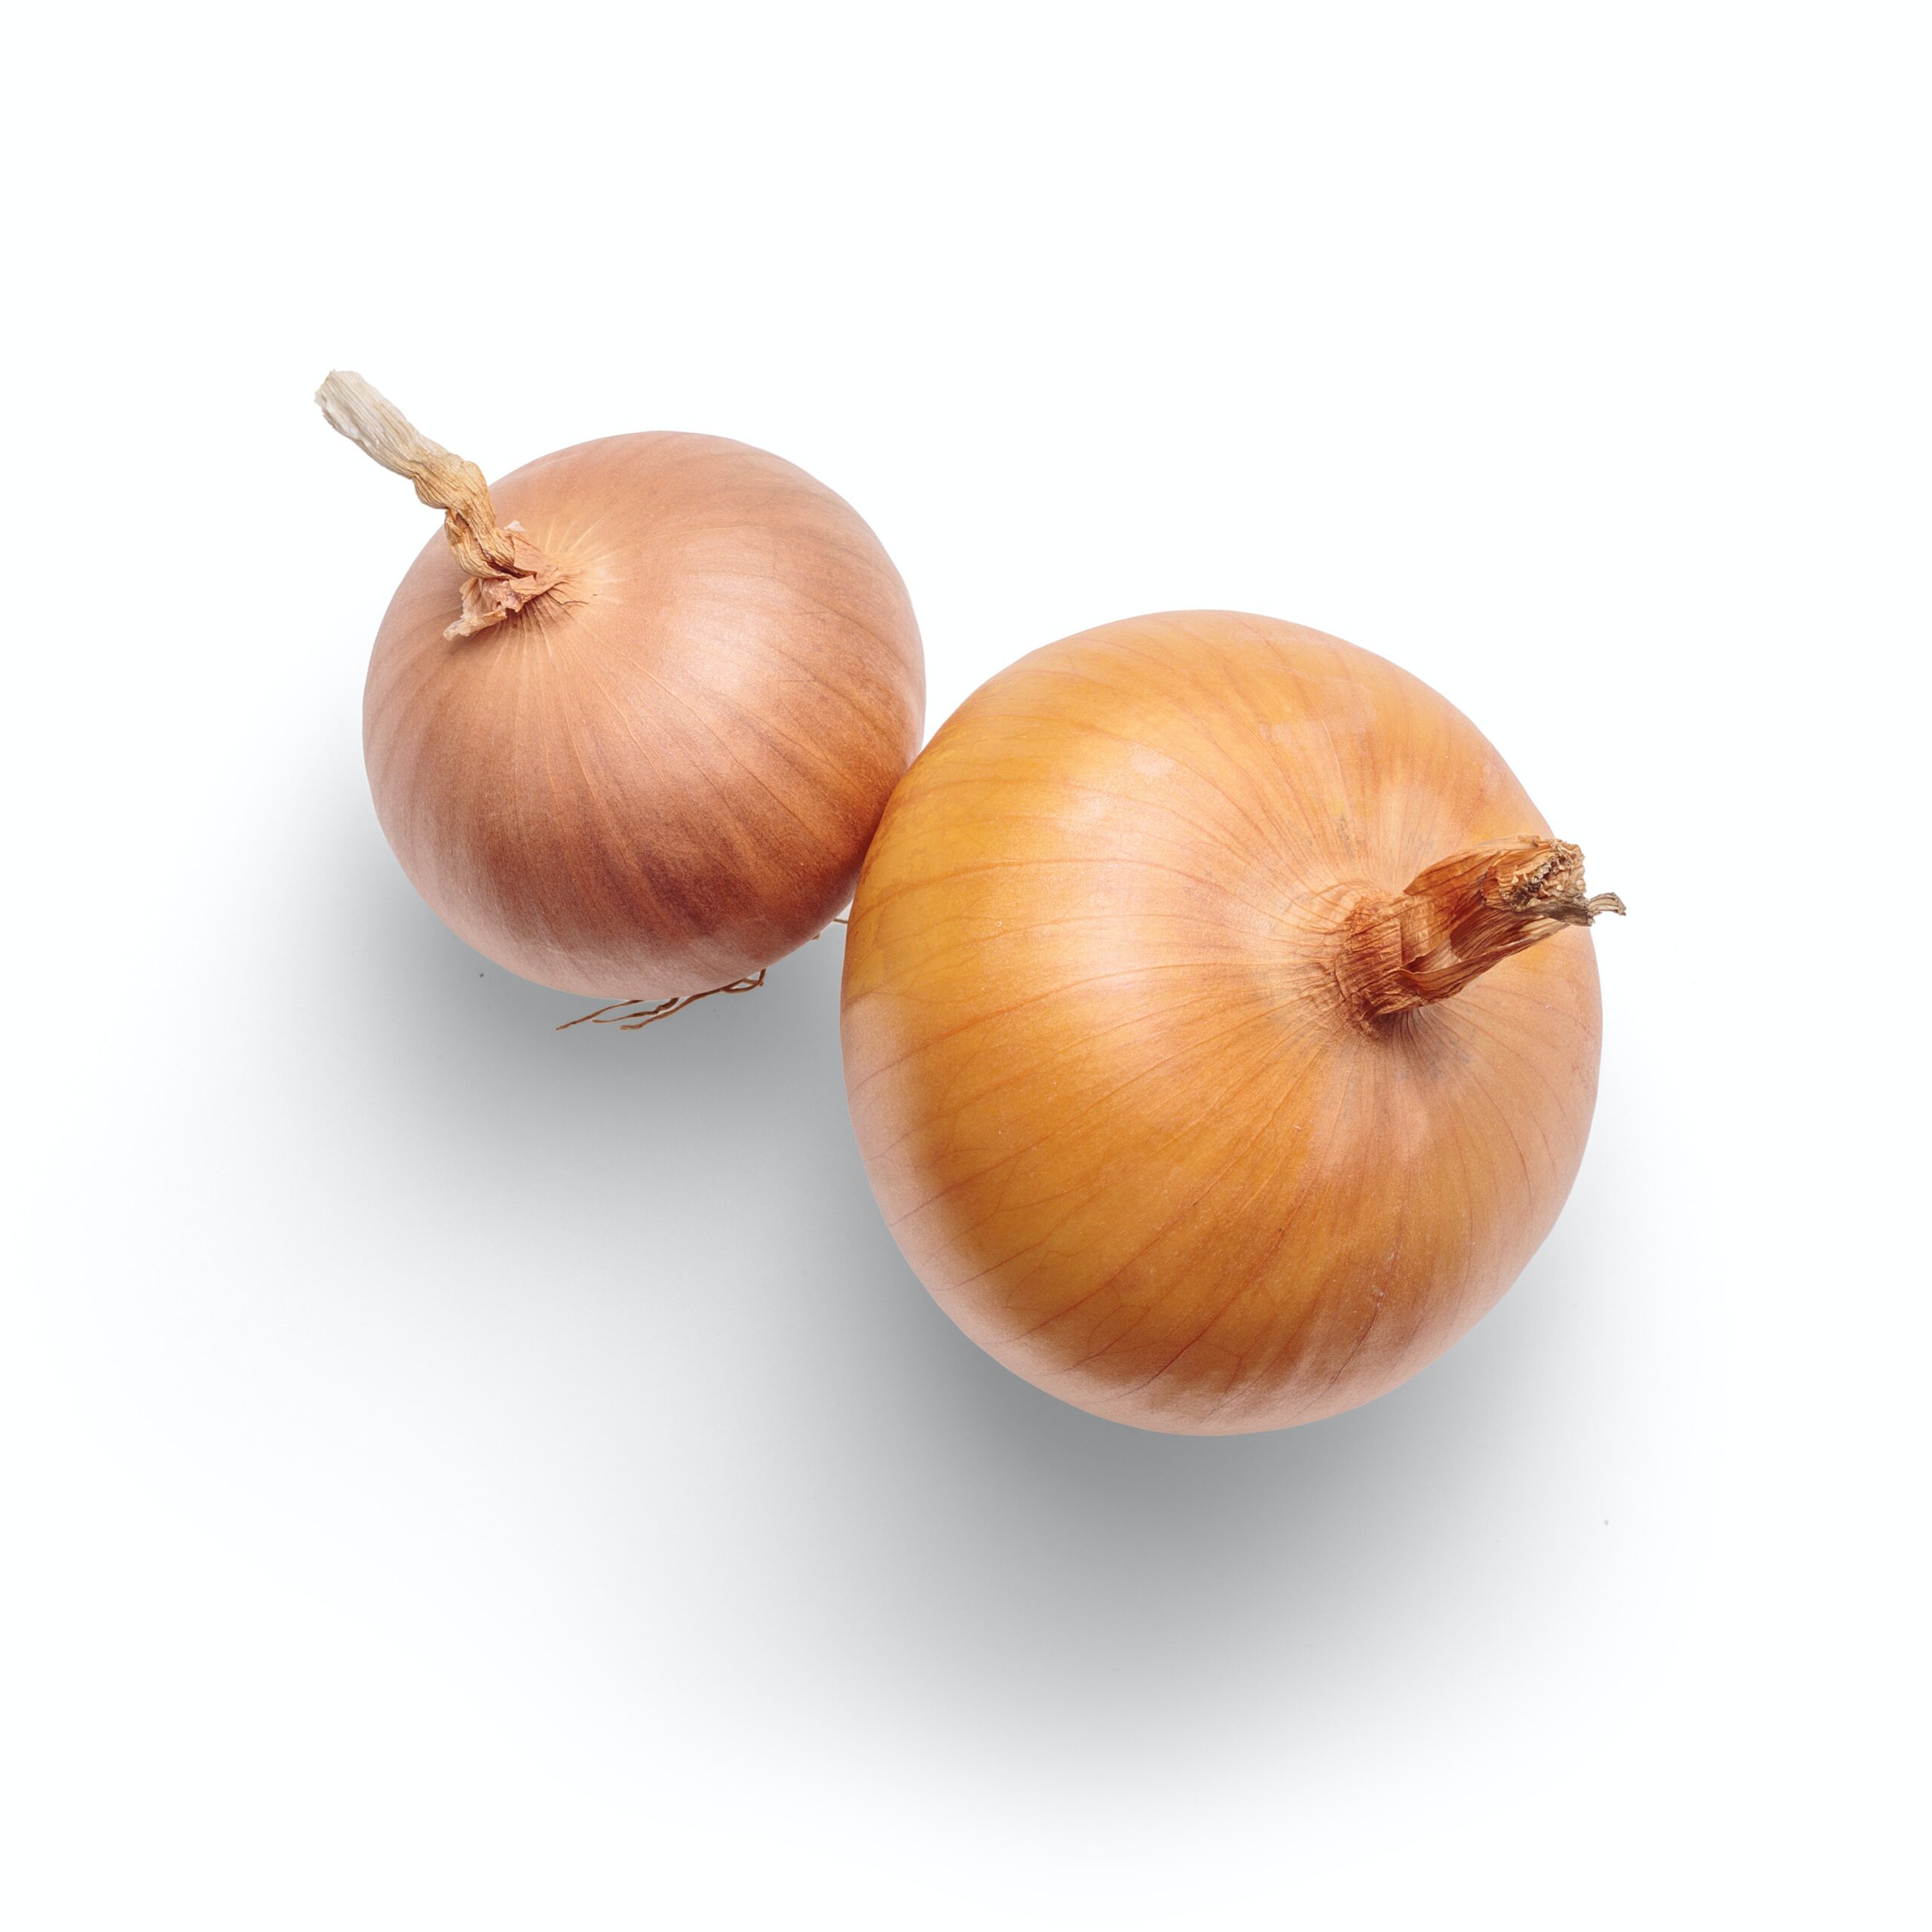 Onions-SPANISH per lb